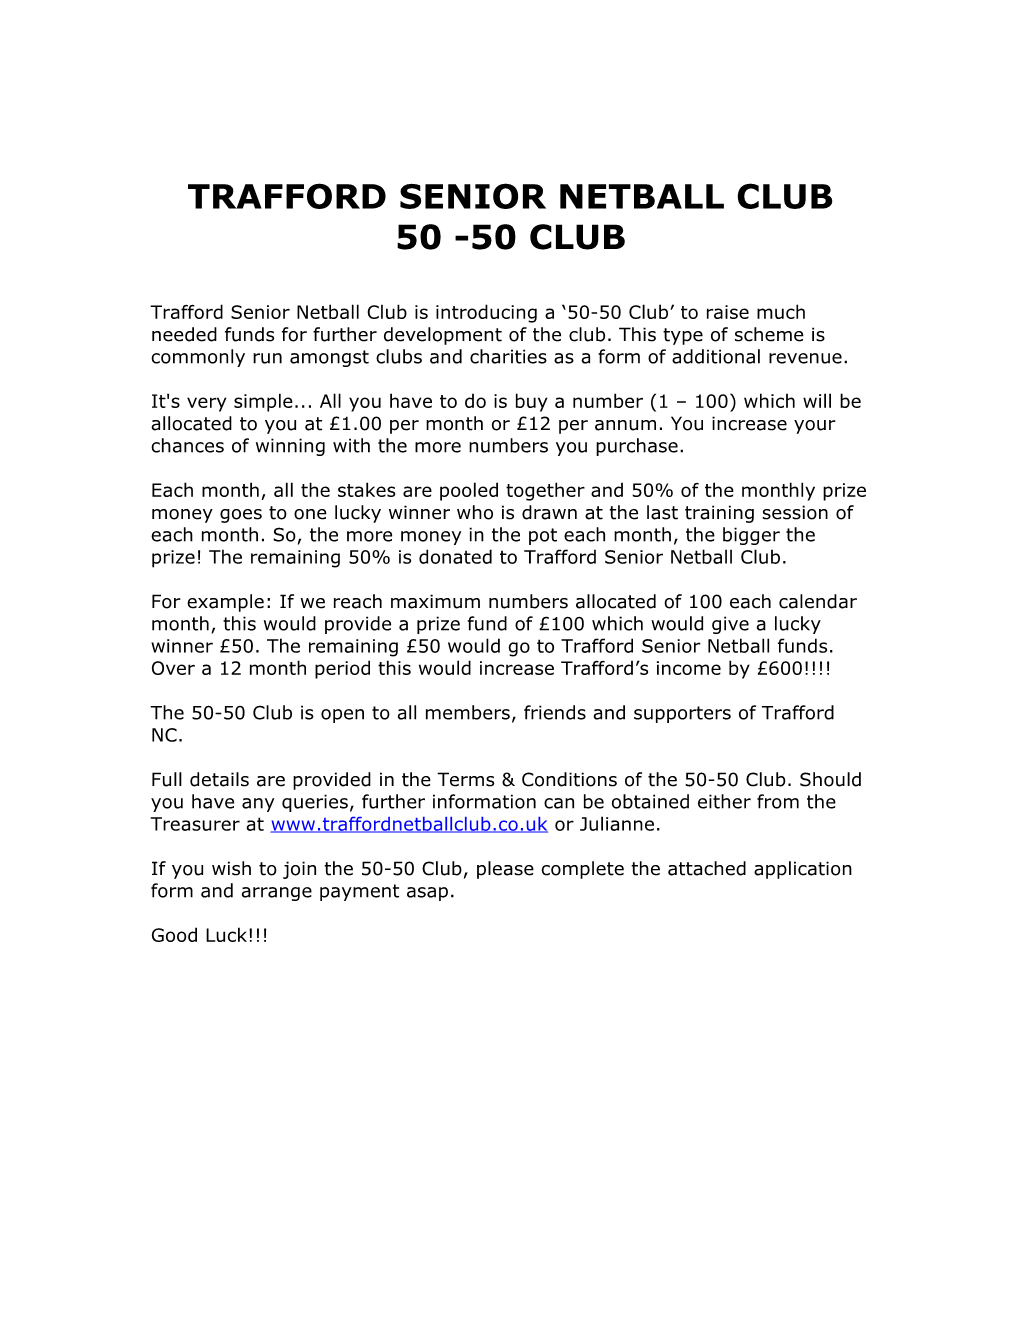 Trafford Senior Netball Club